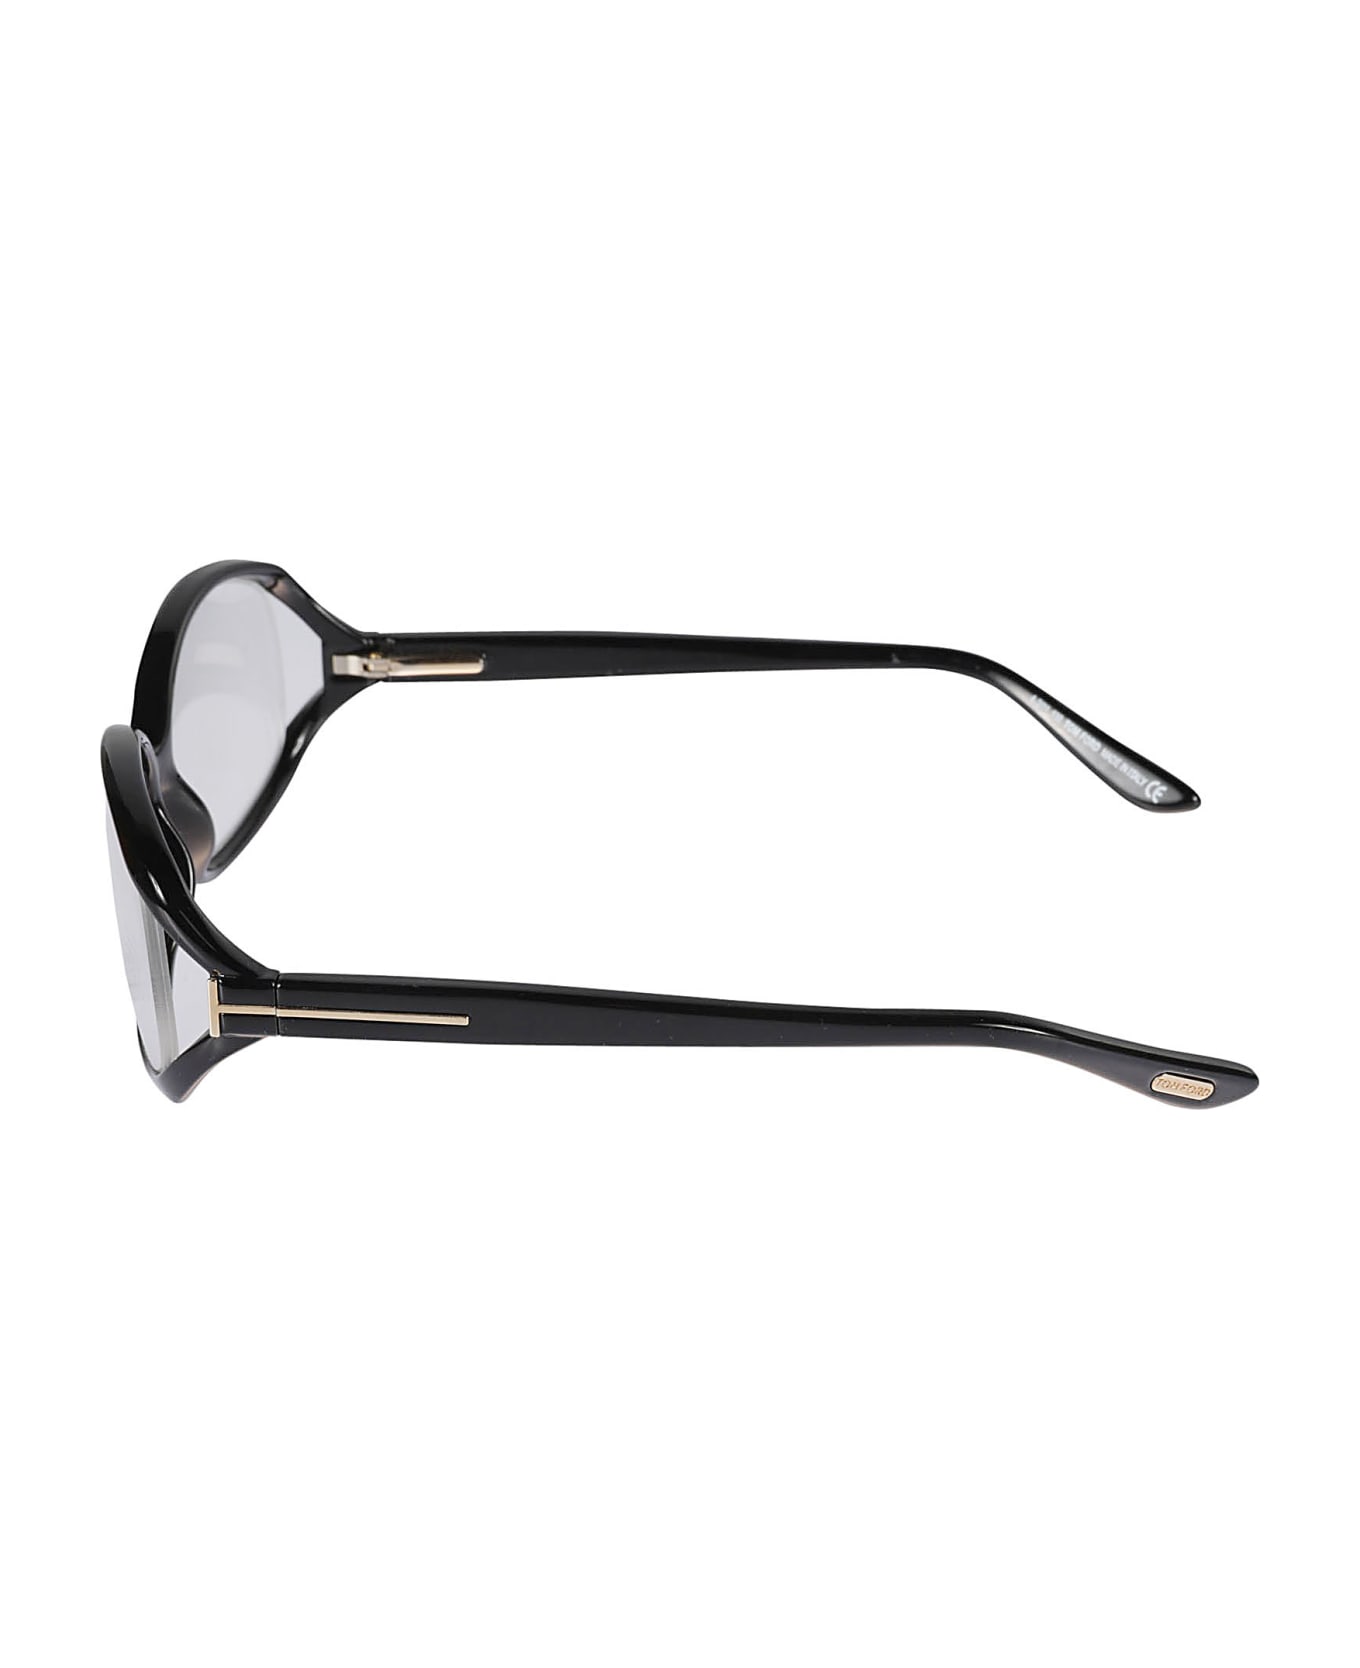 Tom Ford Eyewear Classic Clear Lense Glasses - 001 アイウェア